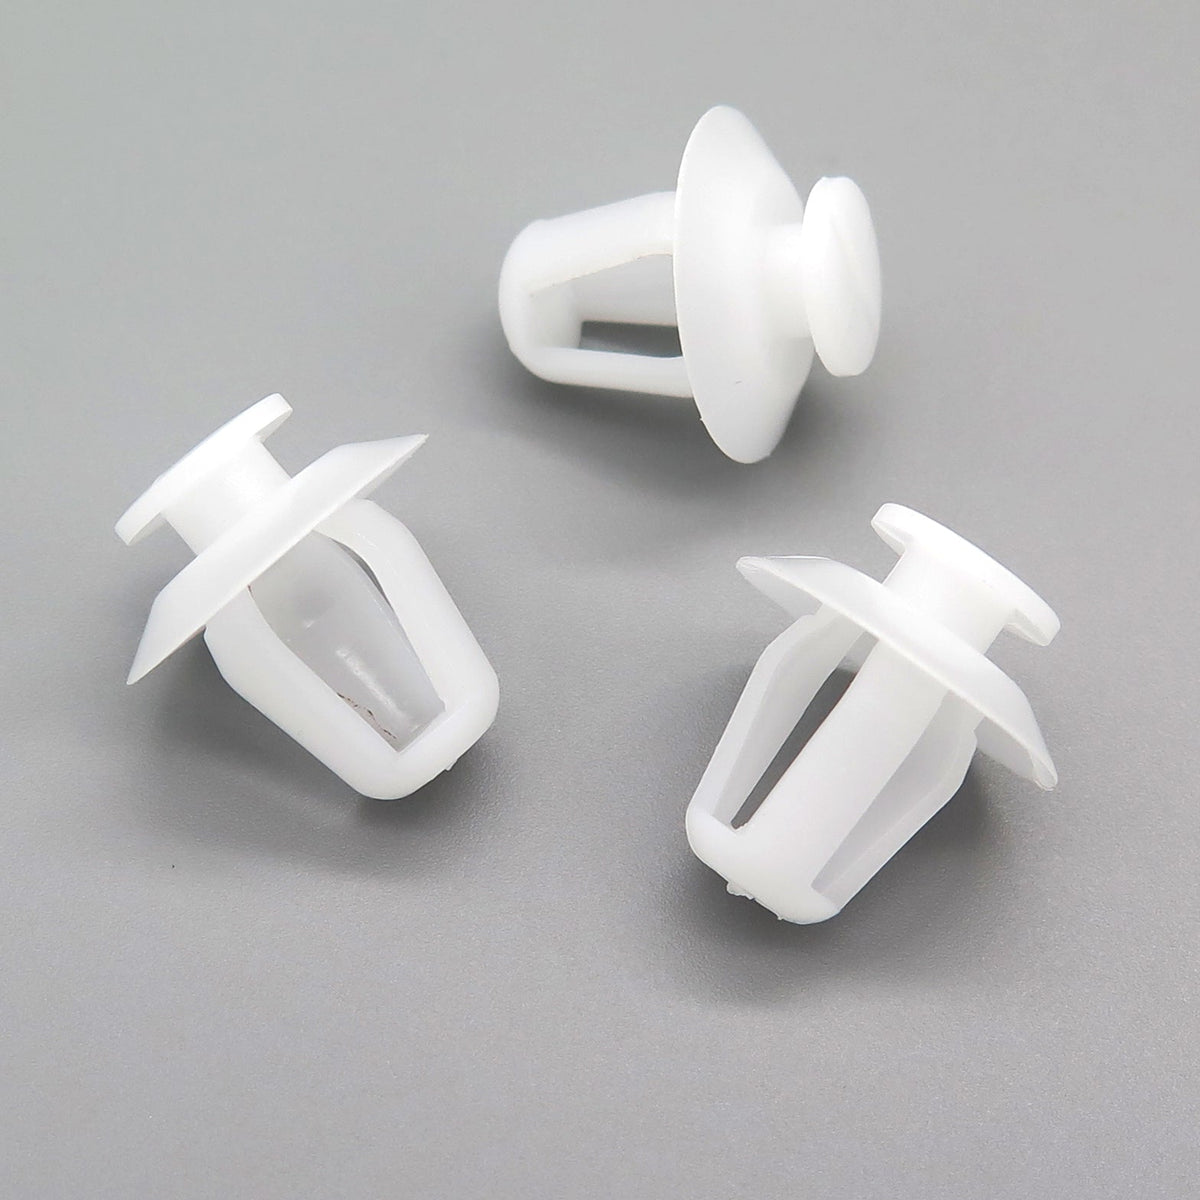 Peugeot Plastic Trim clips for Exterior Door Moulding Bumpstrips & Trims